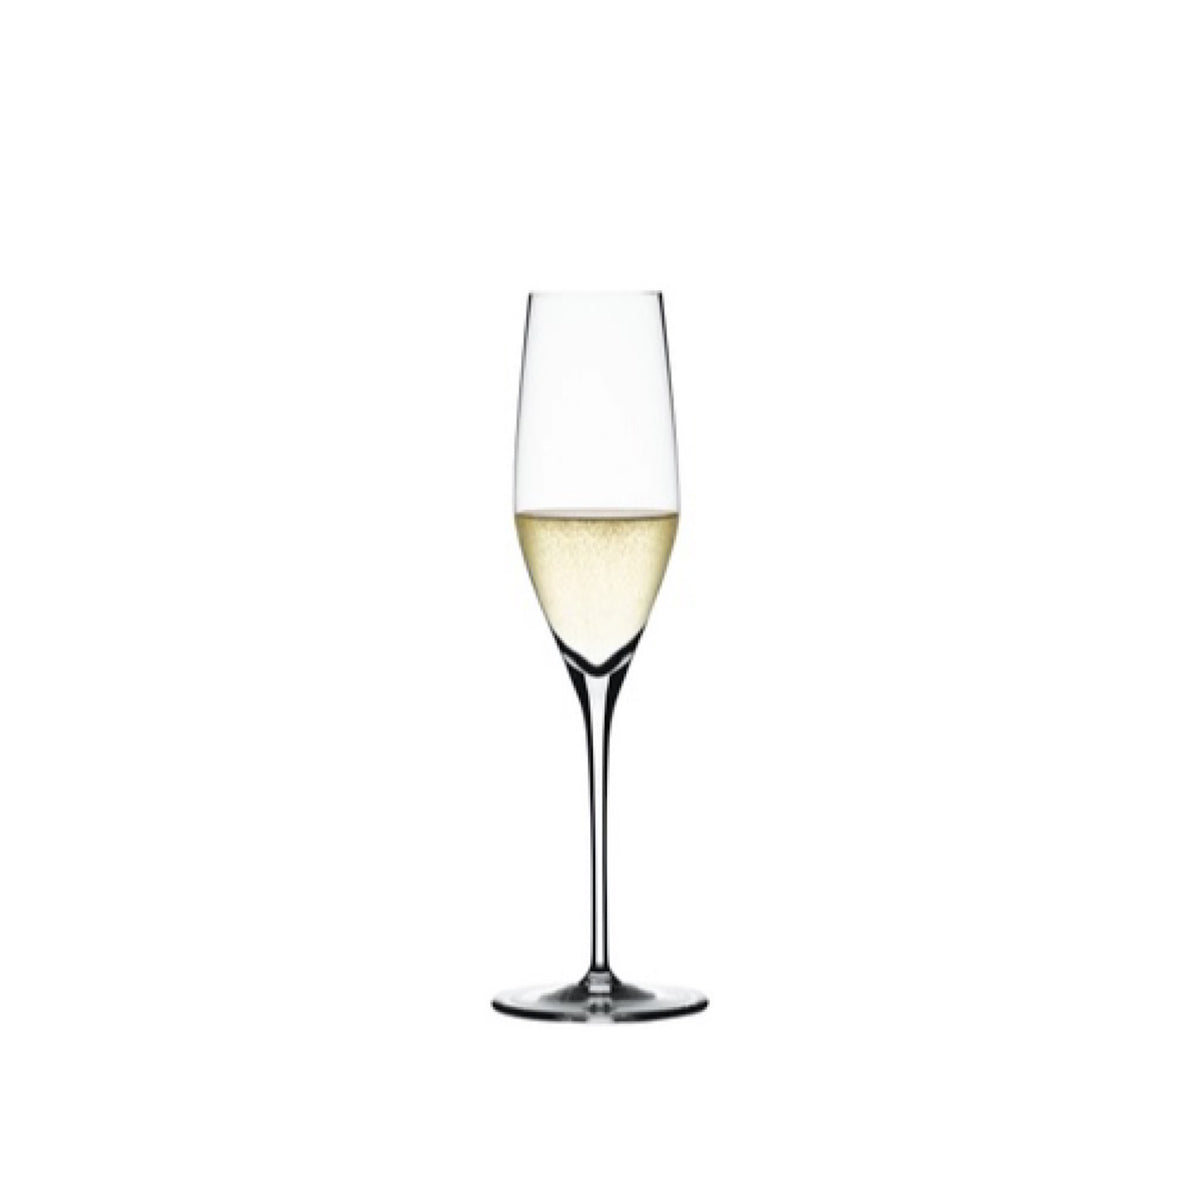 Authentis Sparkling Wine Glasses, Set of 4